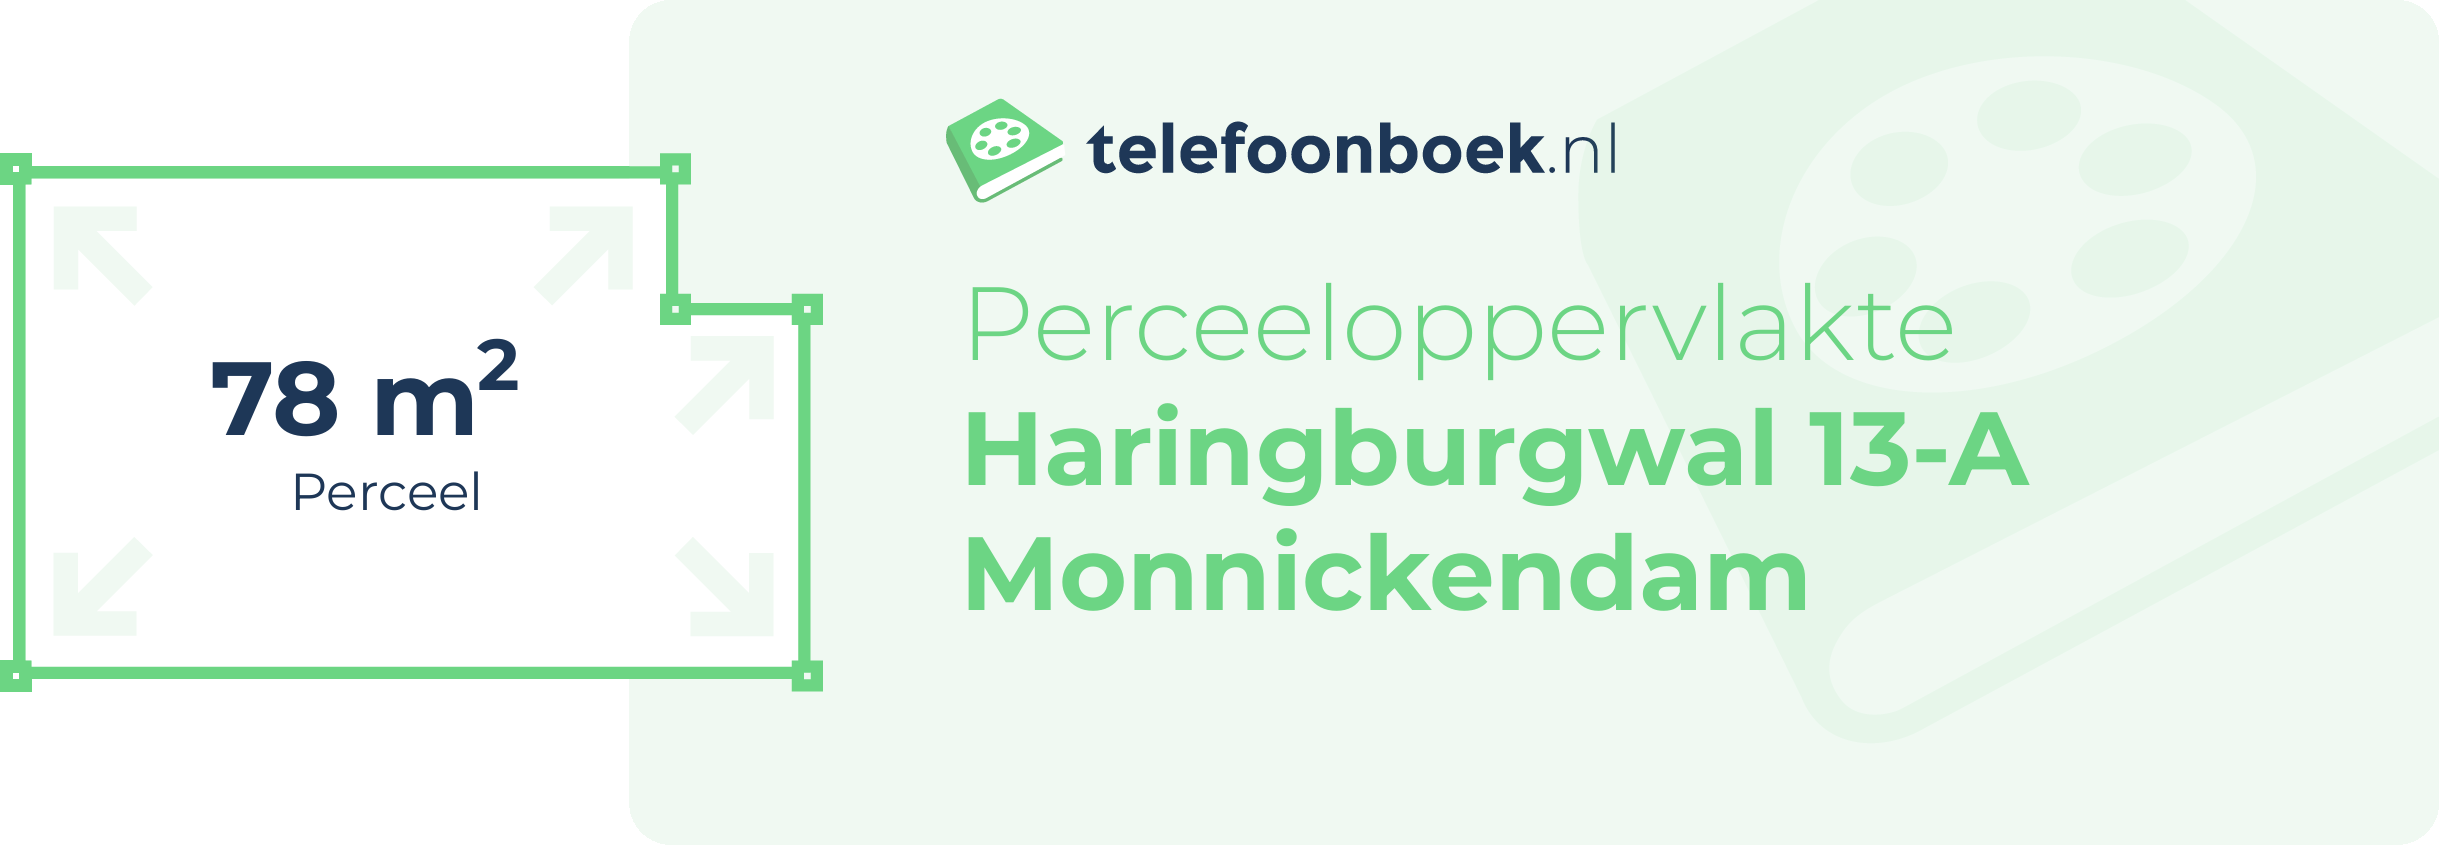 Perceeloppervlakte Haringburgwal 13-A Monnickendam